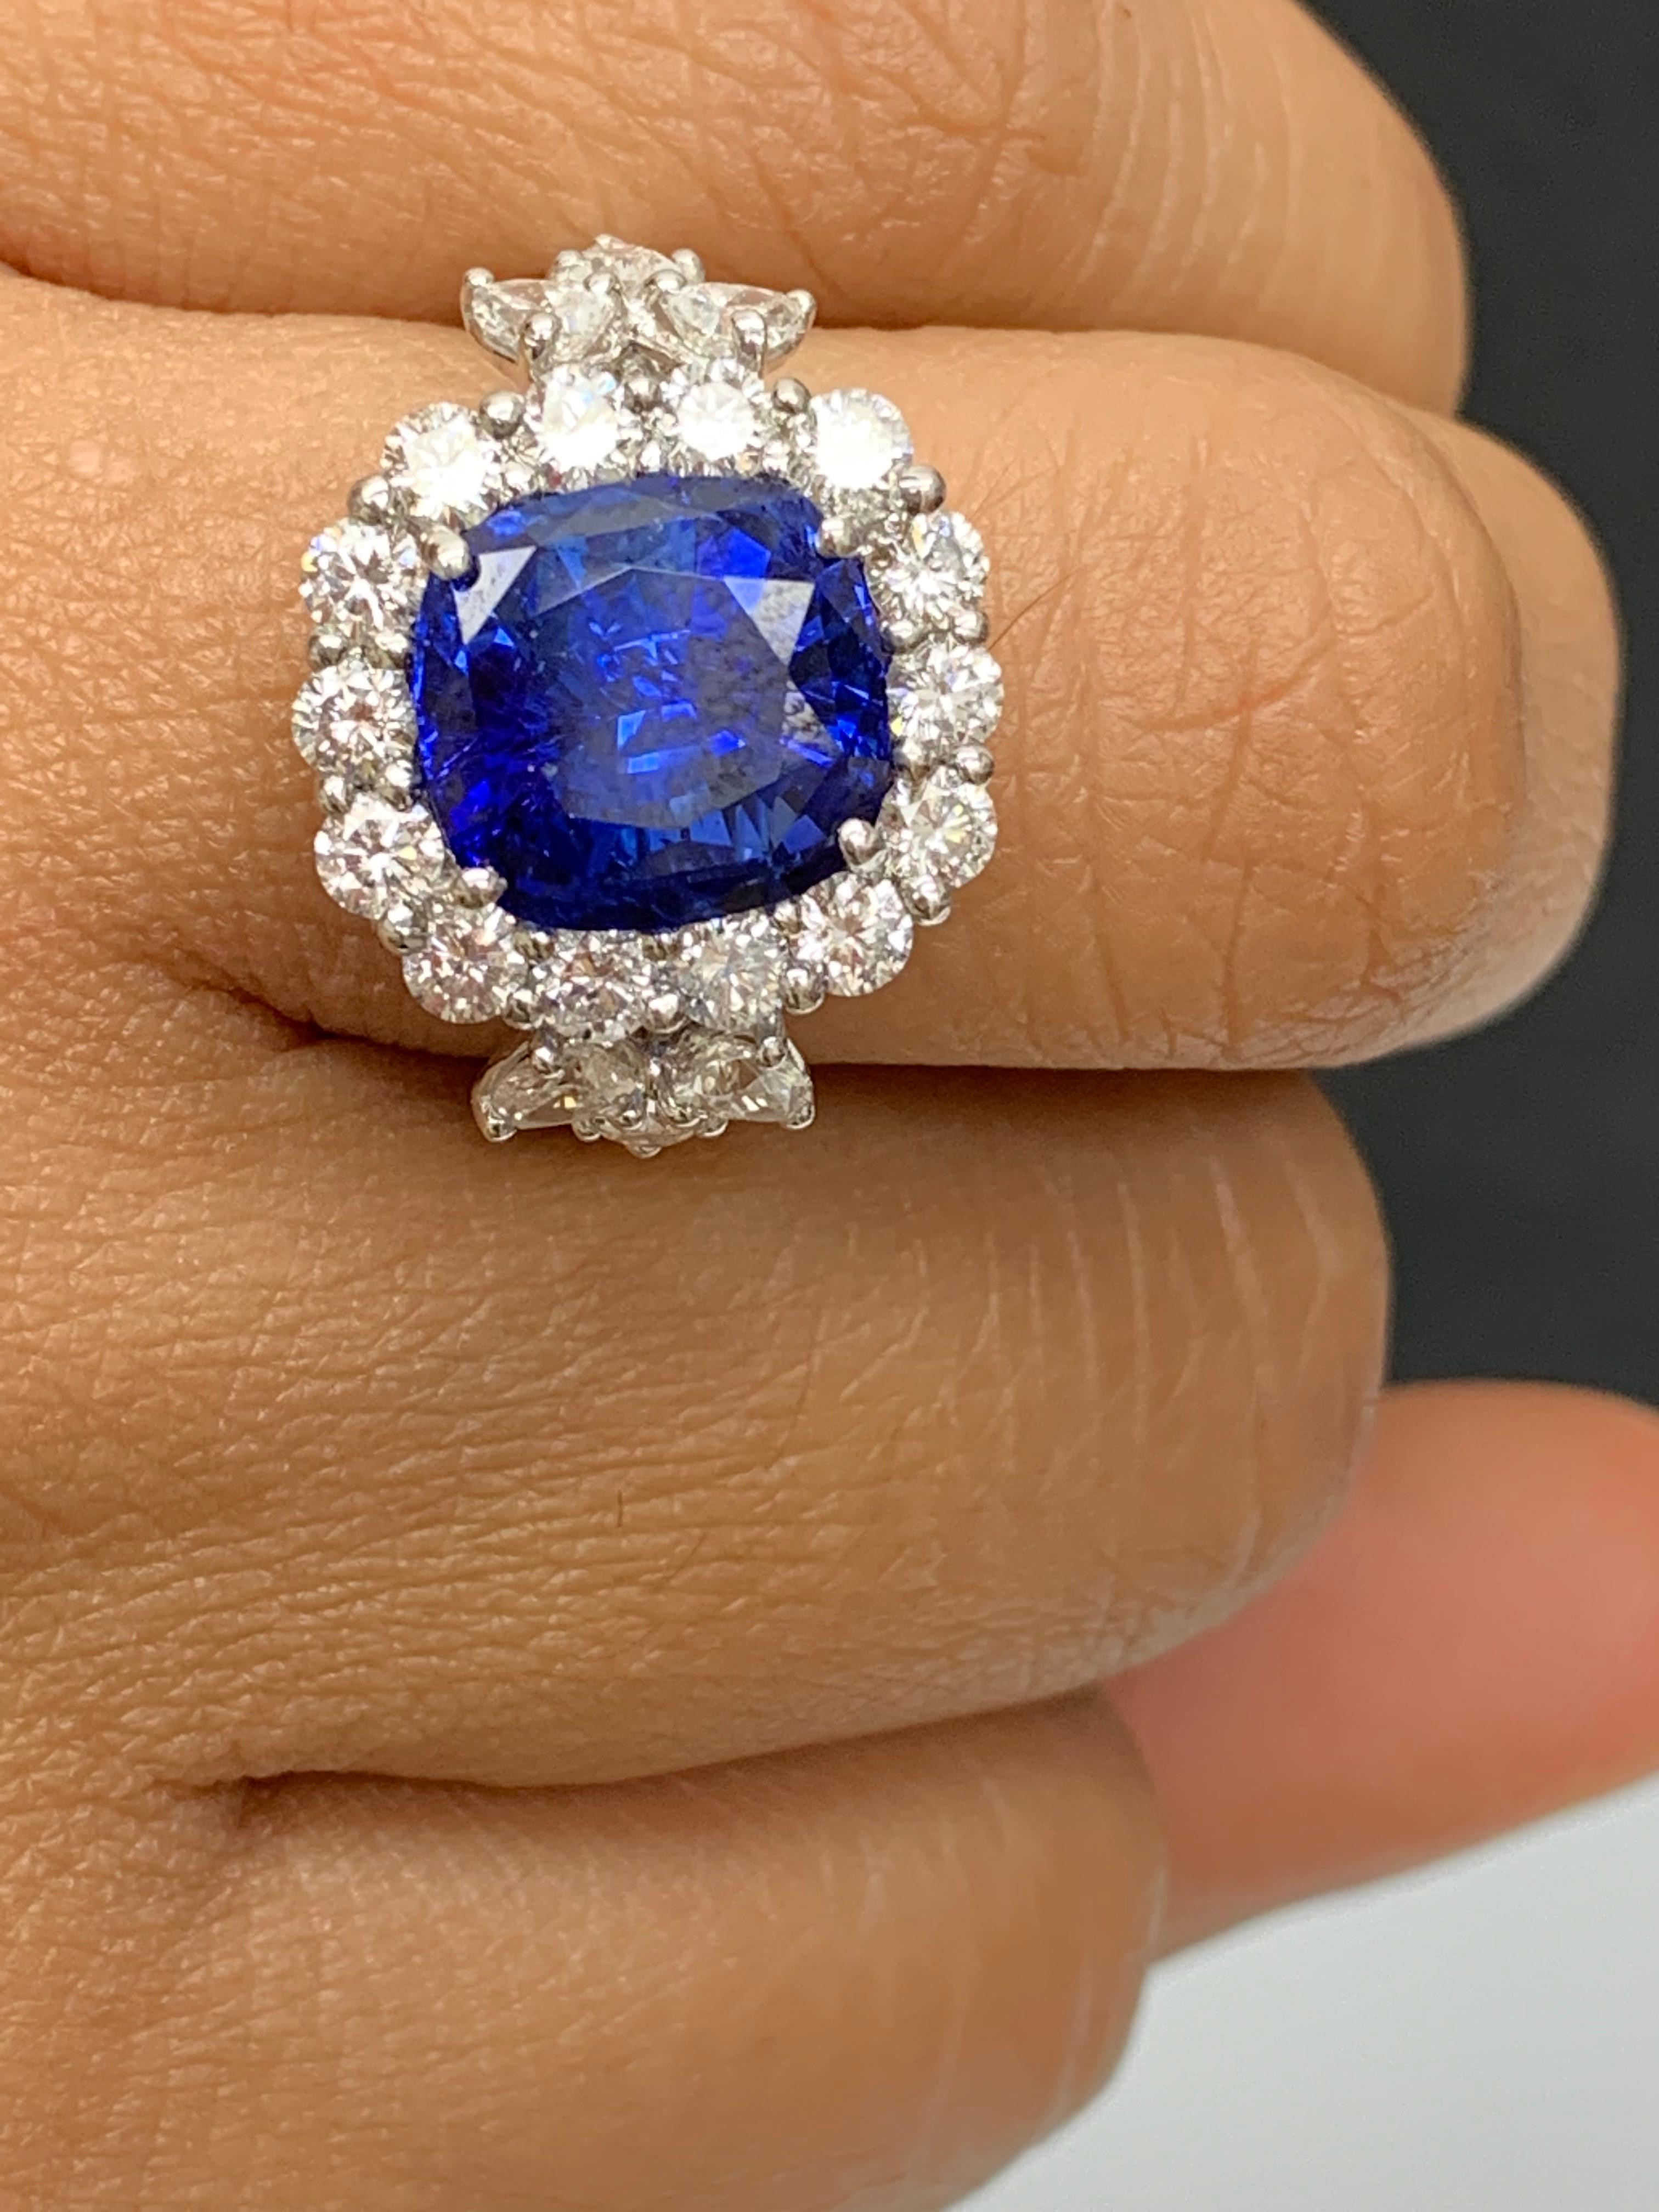 6.61 Carat Cushion Cut Blue Sapphire Diamond Engagement Ring in Platinum For Sale 3